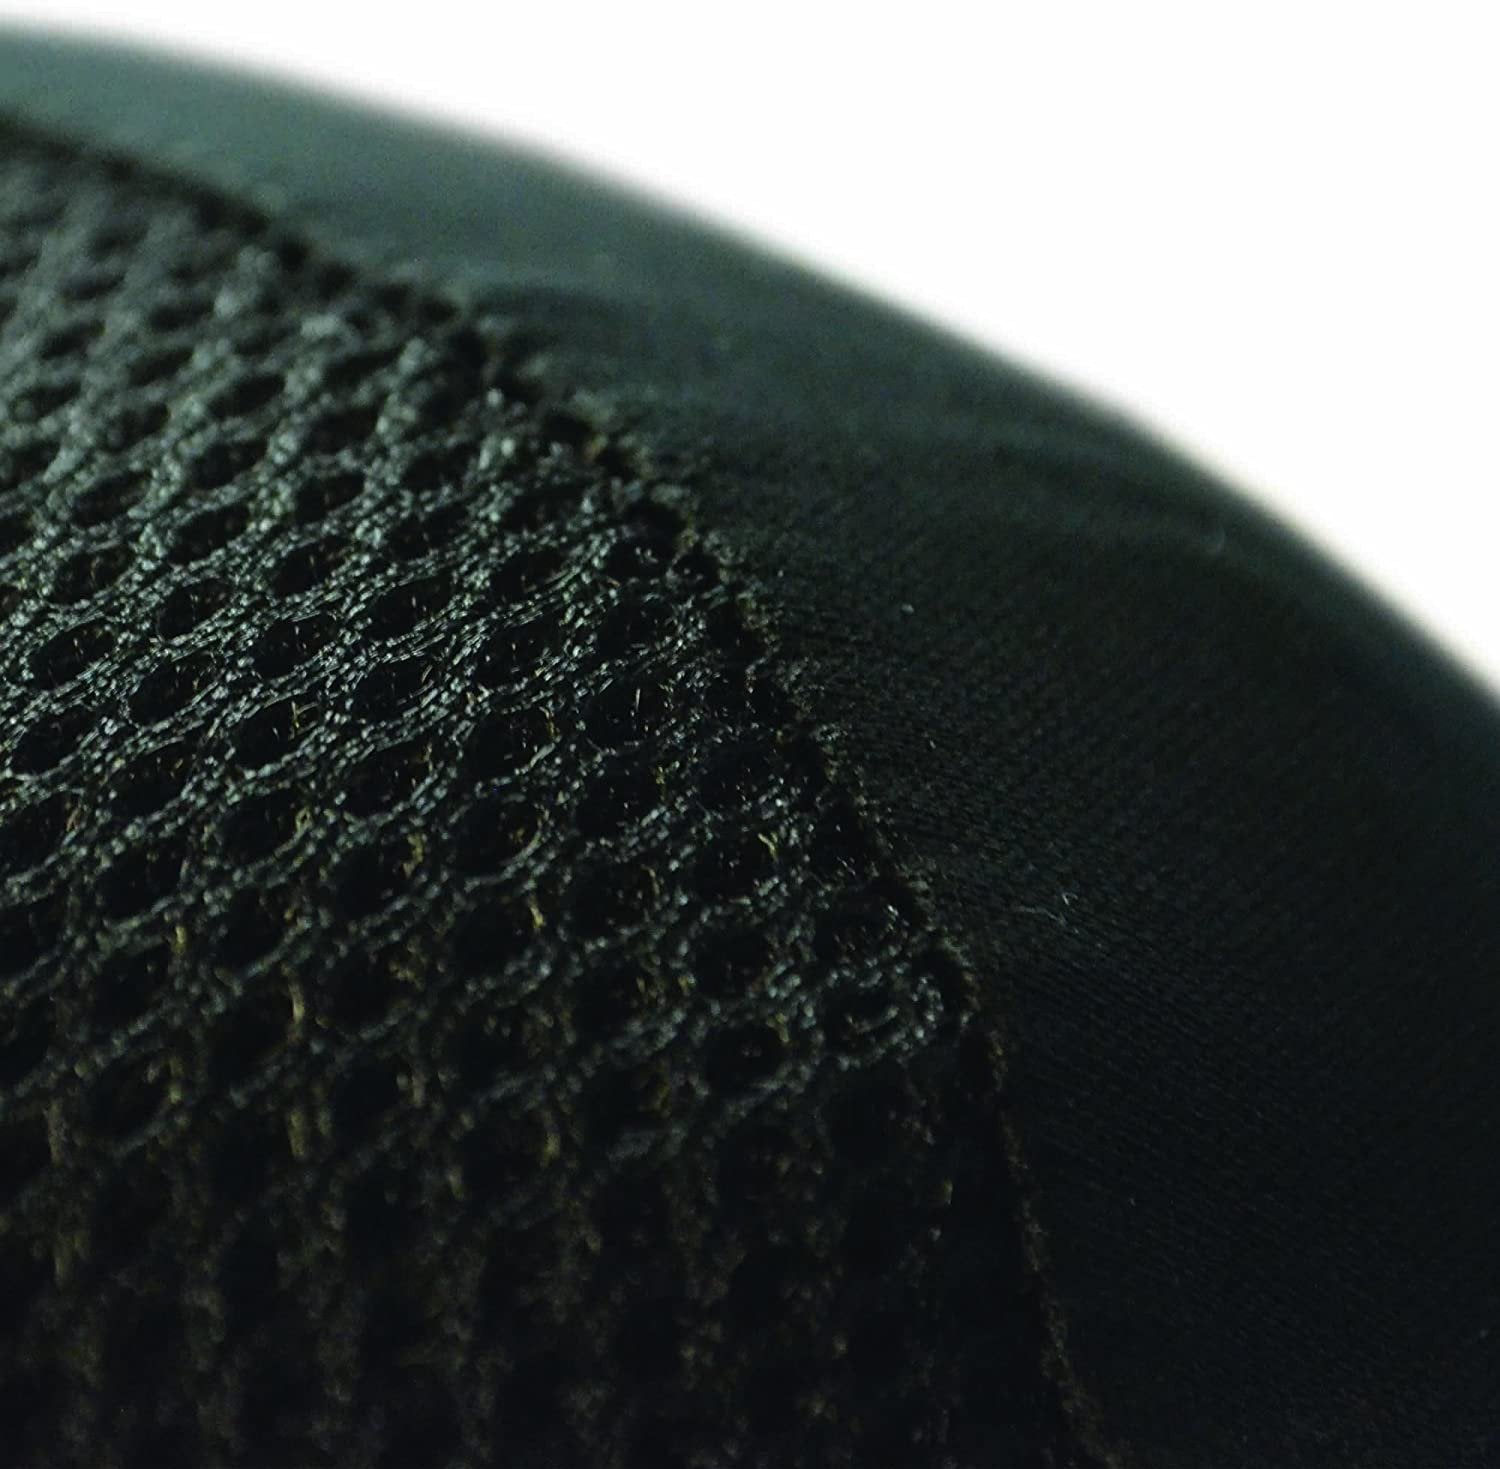 University of Florida Gators Pair of Premium Auto Head Rest Covers, Embroidered, Black Elastic, 14x10 Inch